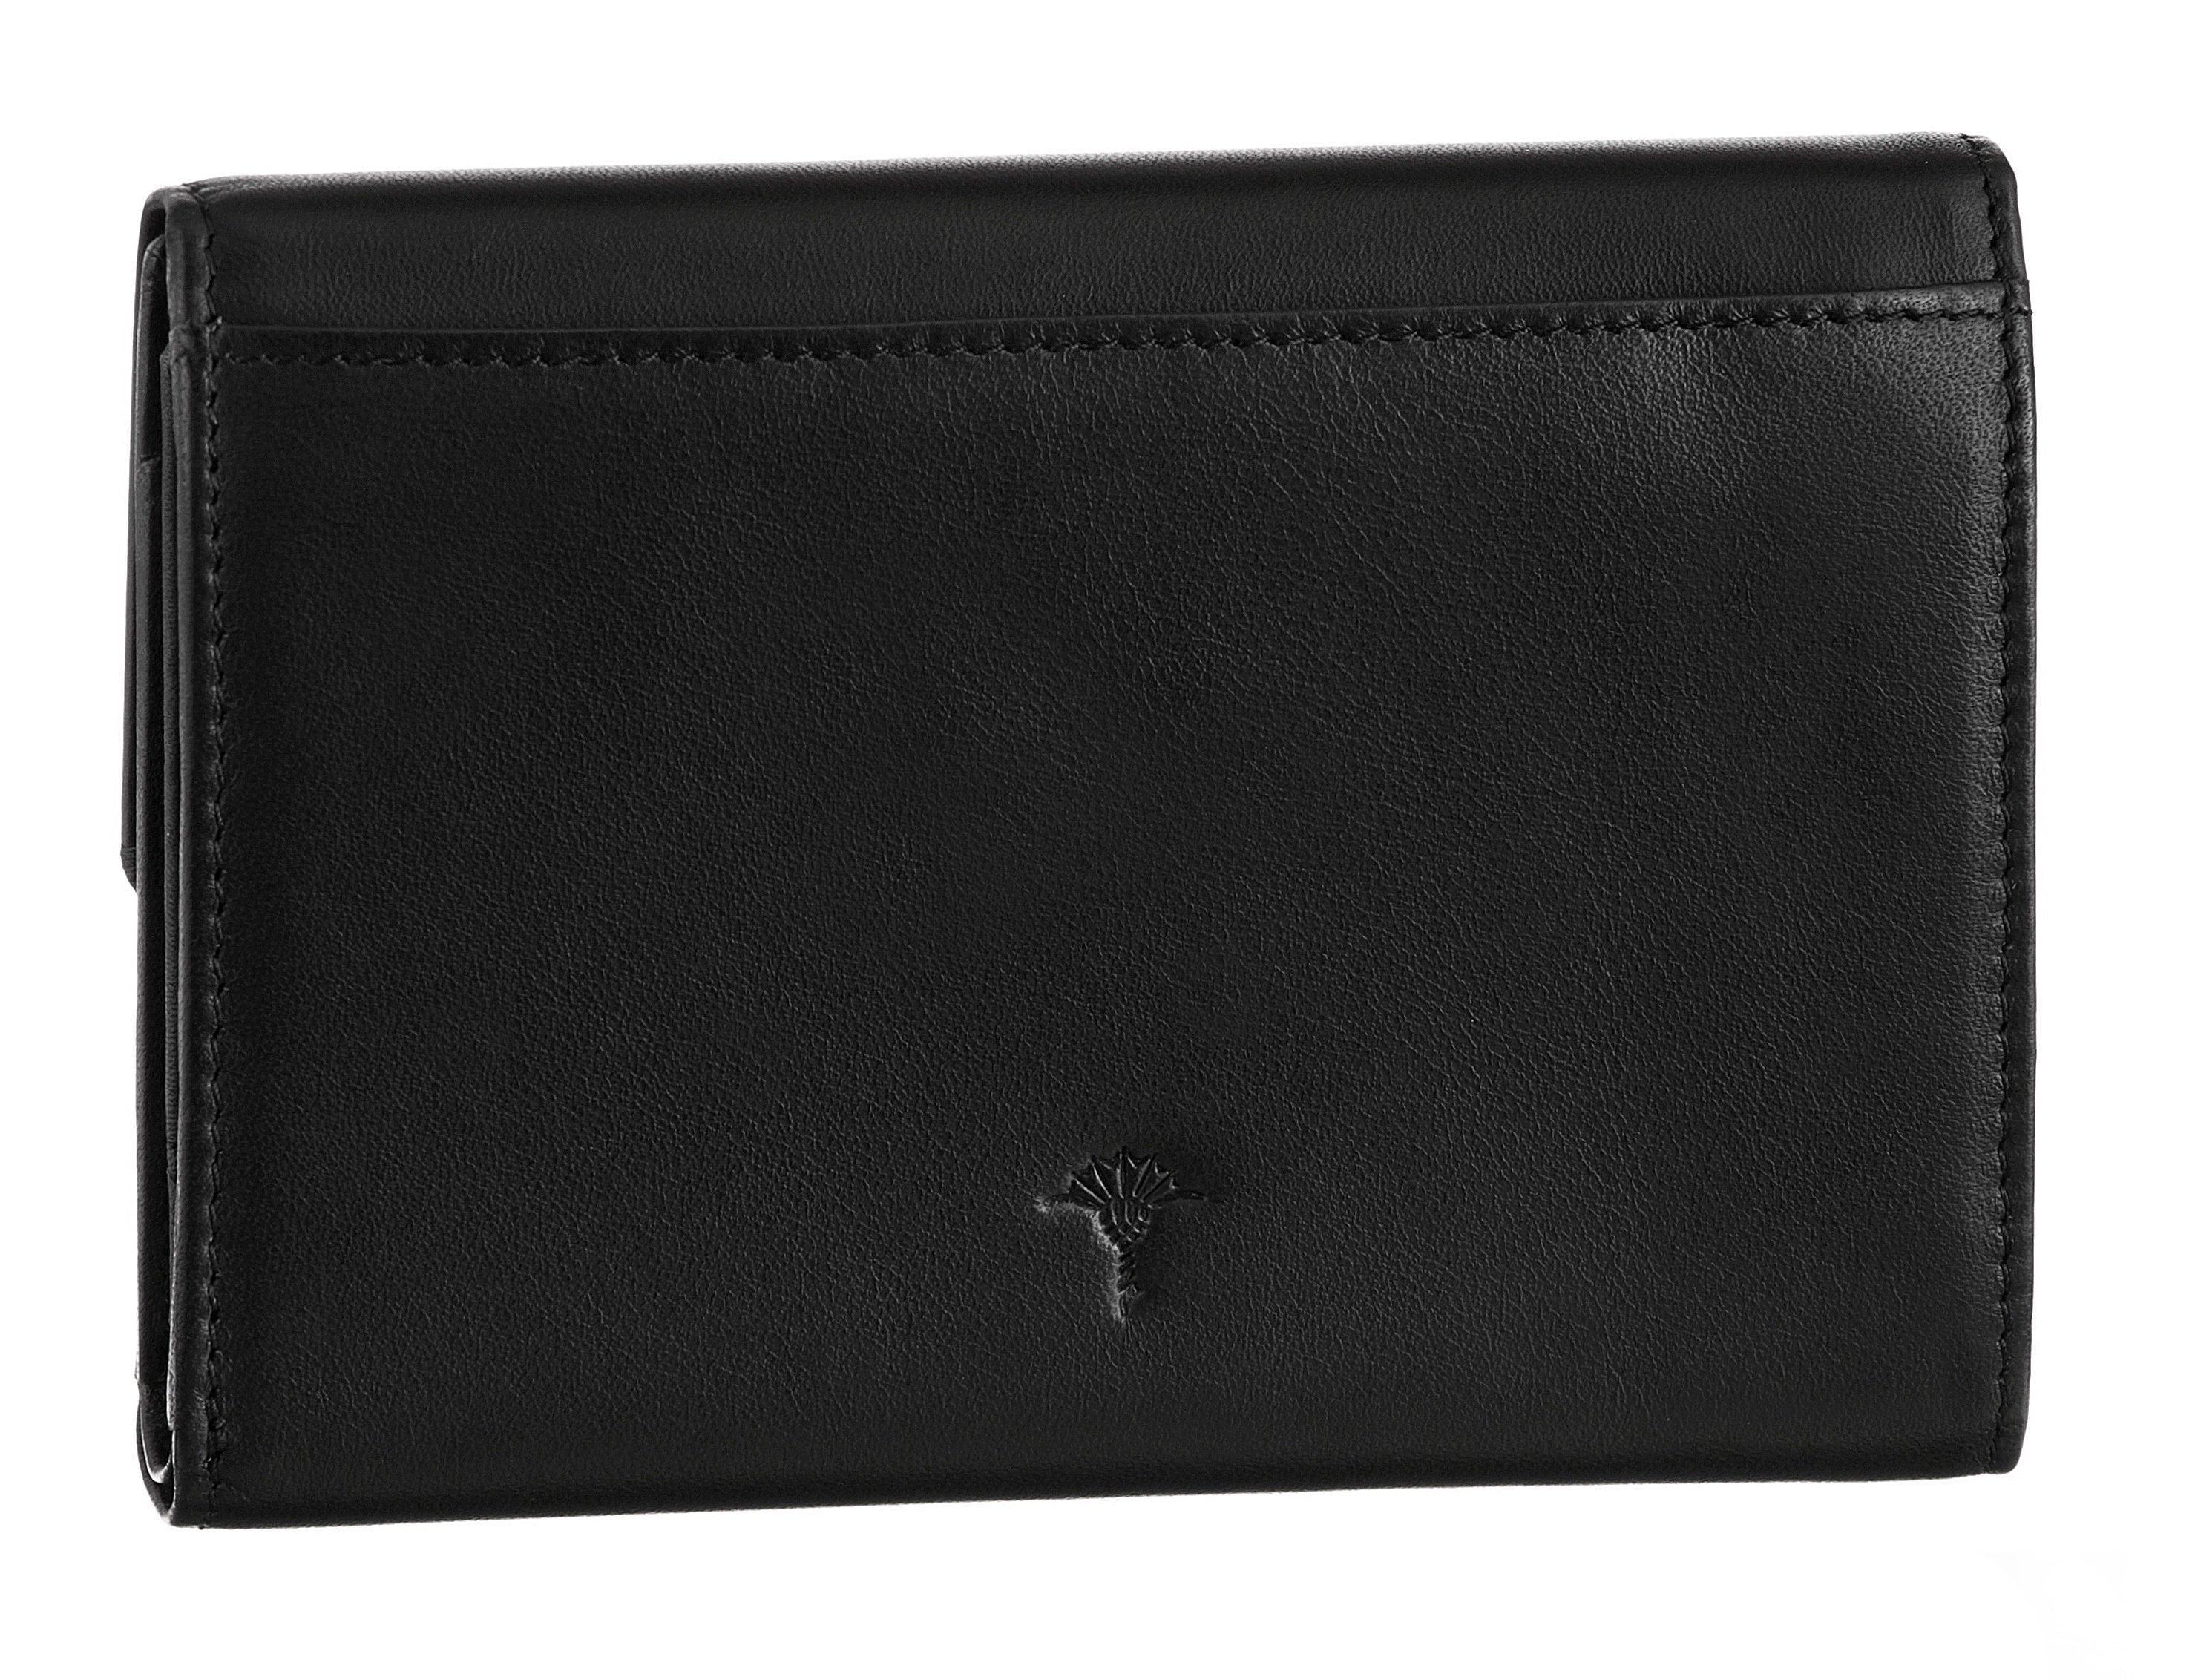 Joop! Geldbörse sofisticato cosma 1.0 black schlichtem in mh10f, Design purse